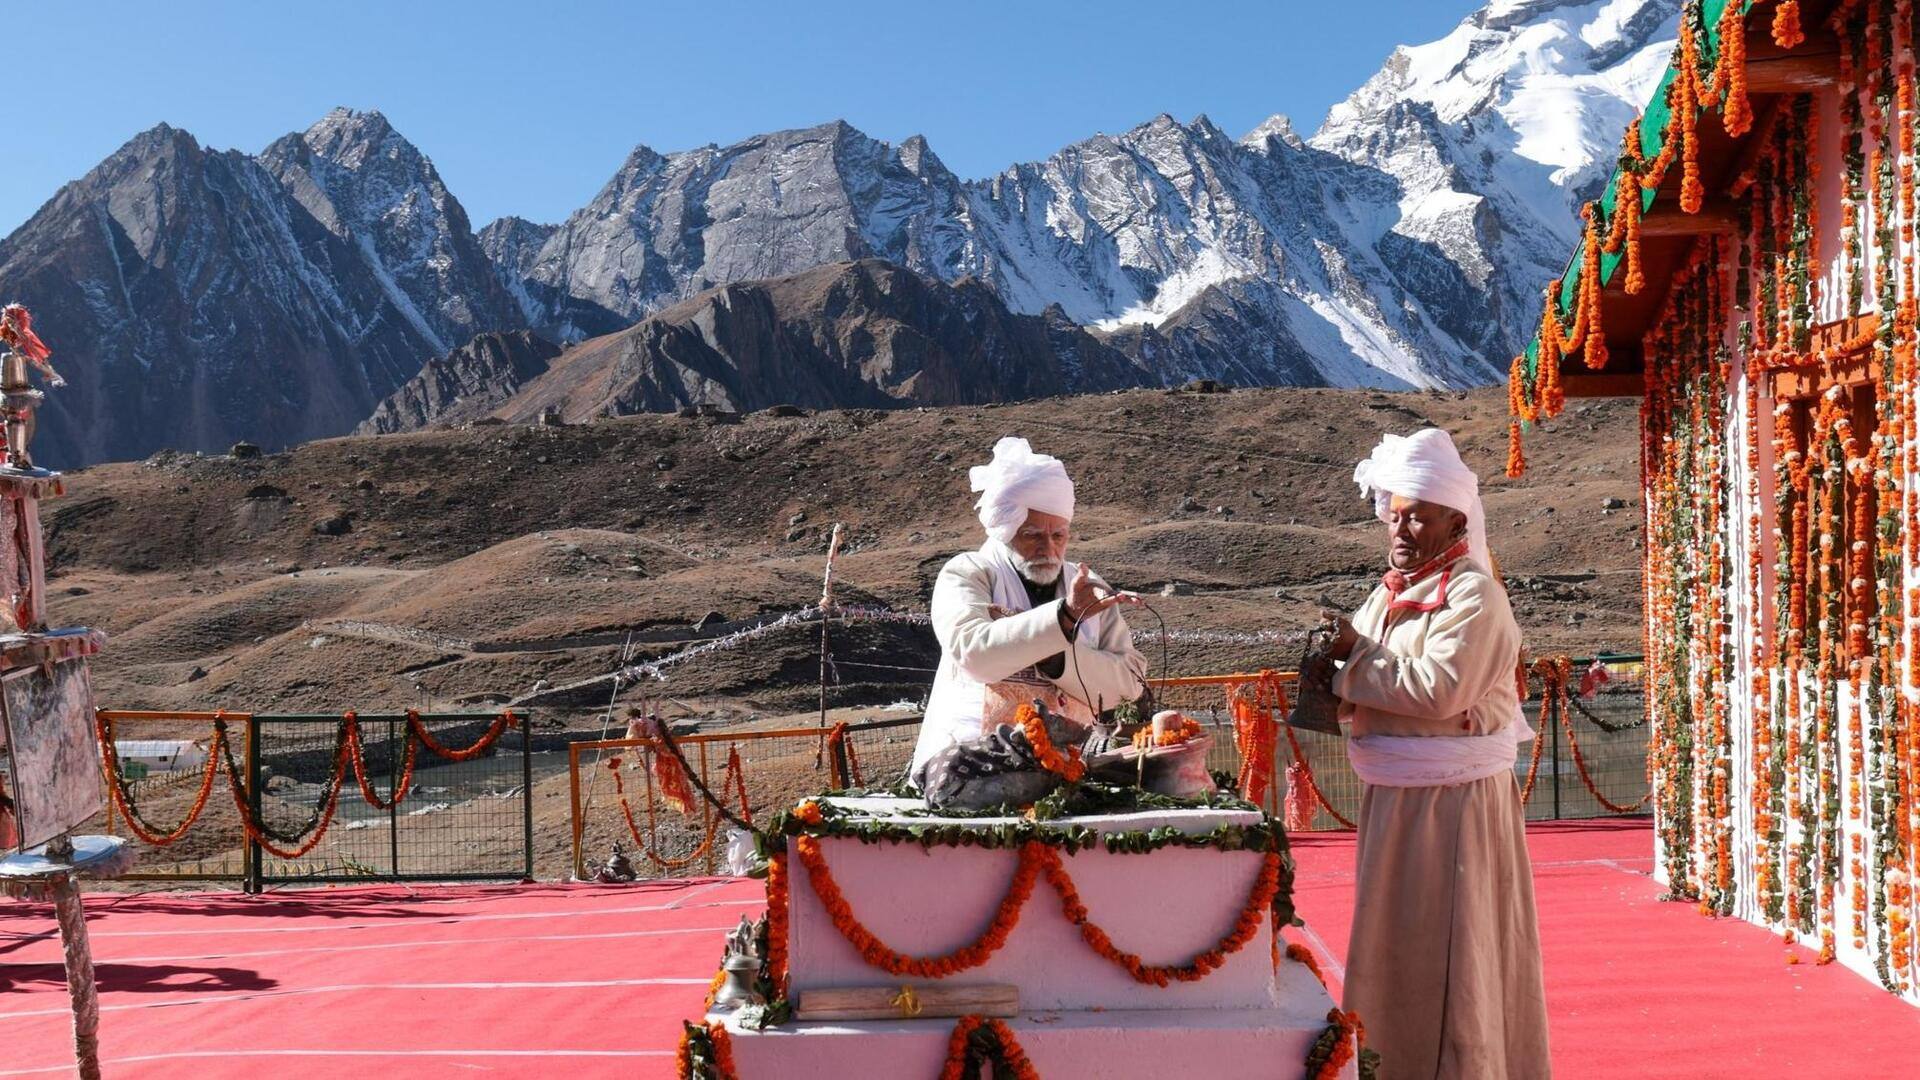 उत्तराखंड के पिथौरागढ़ पहुंचे प्रधानमंत्री मोदी, पार्वती कुंड में पूजा कर डमरू बजाया